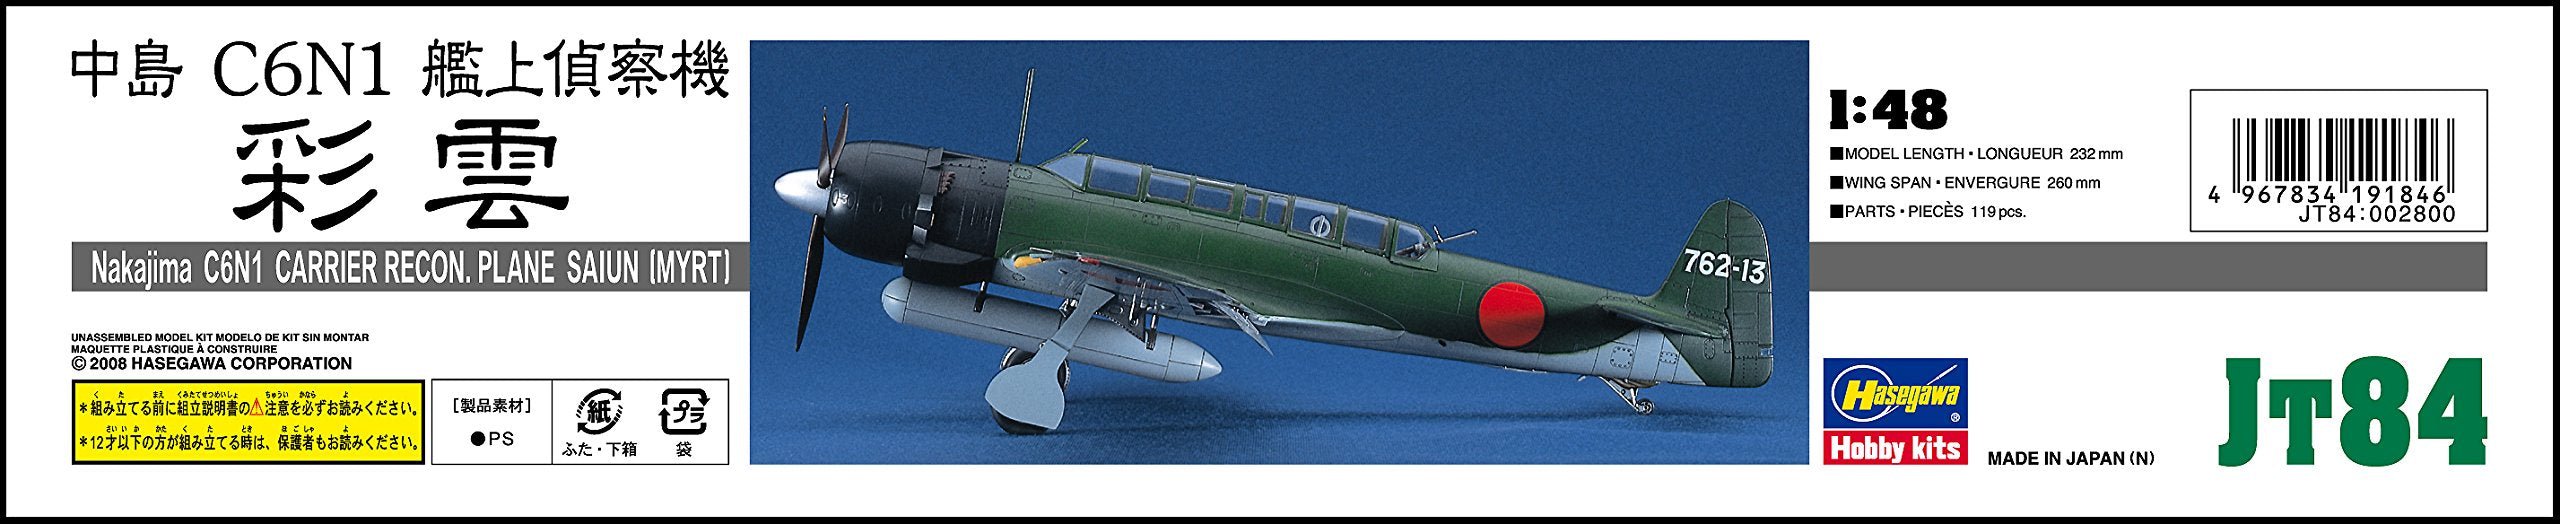 HASEGAWA 1/48 Nakajima C6M1 Carrier Recon. Flugzeug Saiun Myrt Plastikmodell